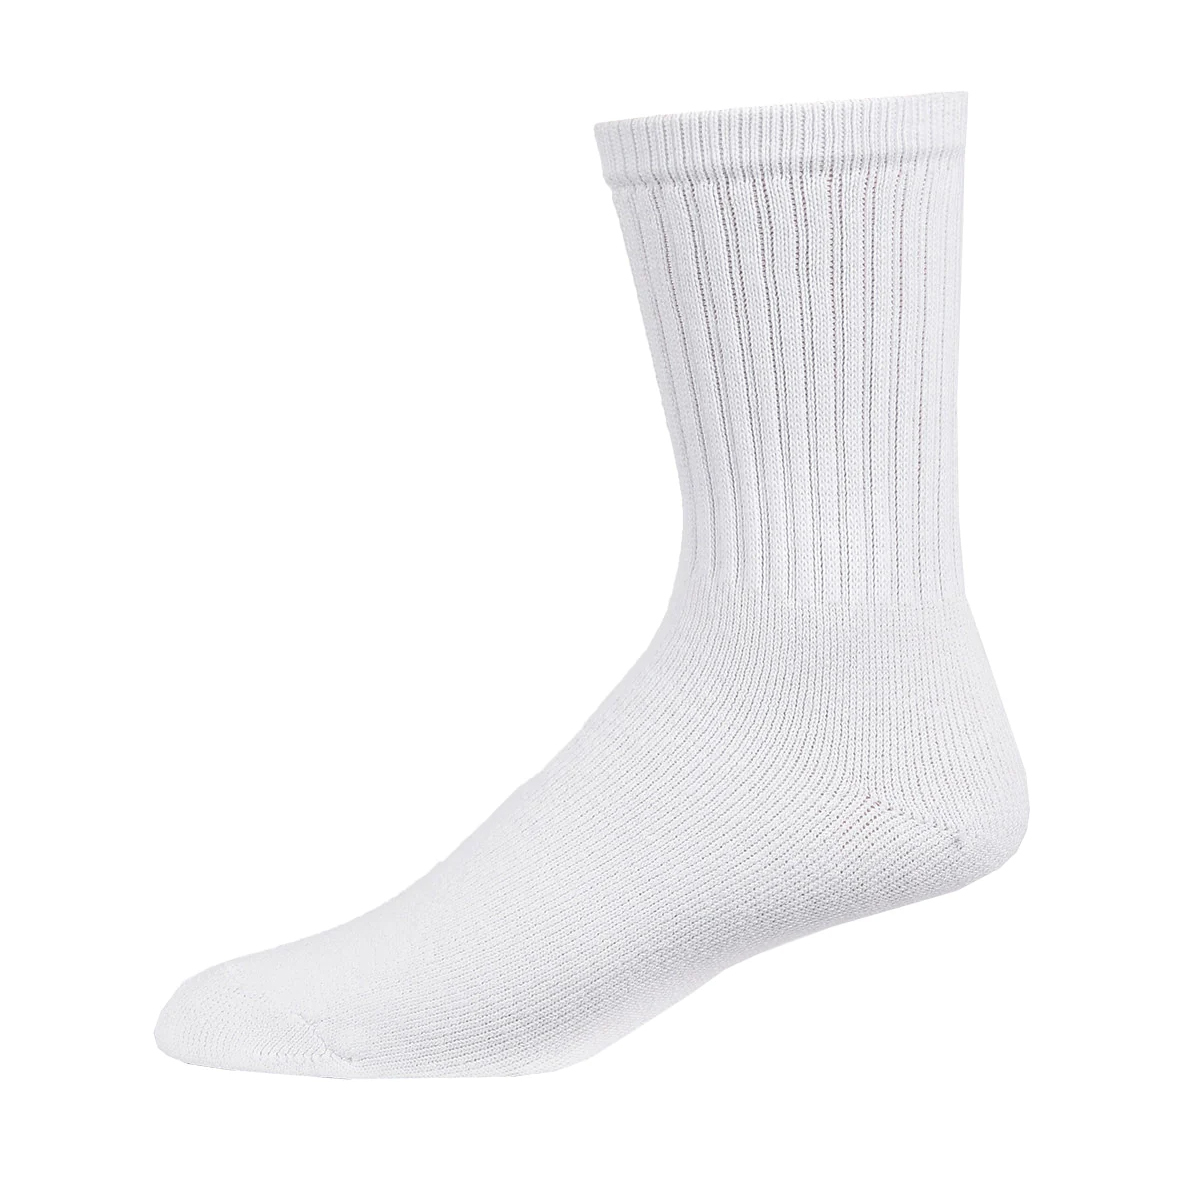 Bulk Kids' Crew Sports Socks, White, Size 4-6, 4 Packs - DollarDays